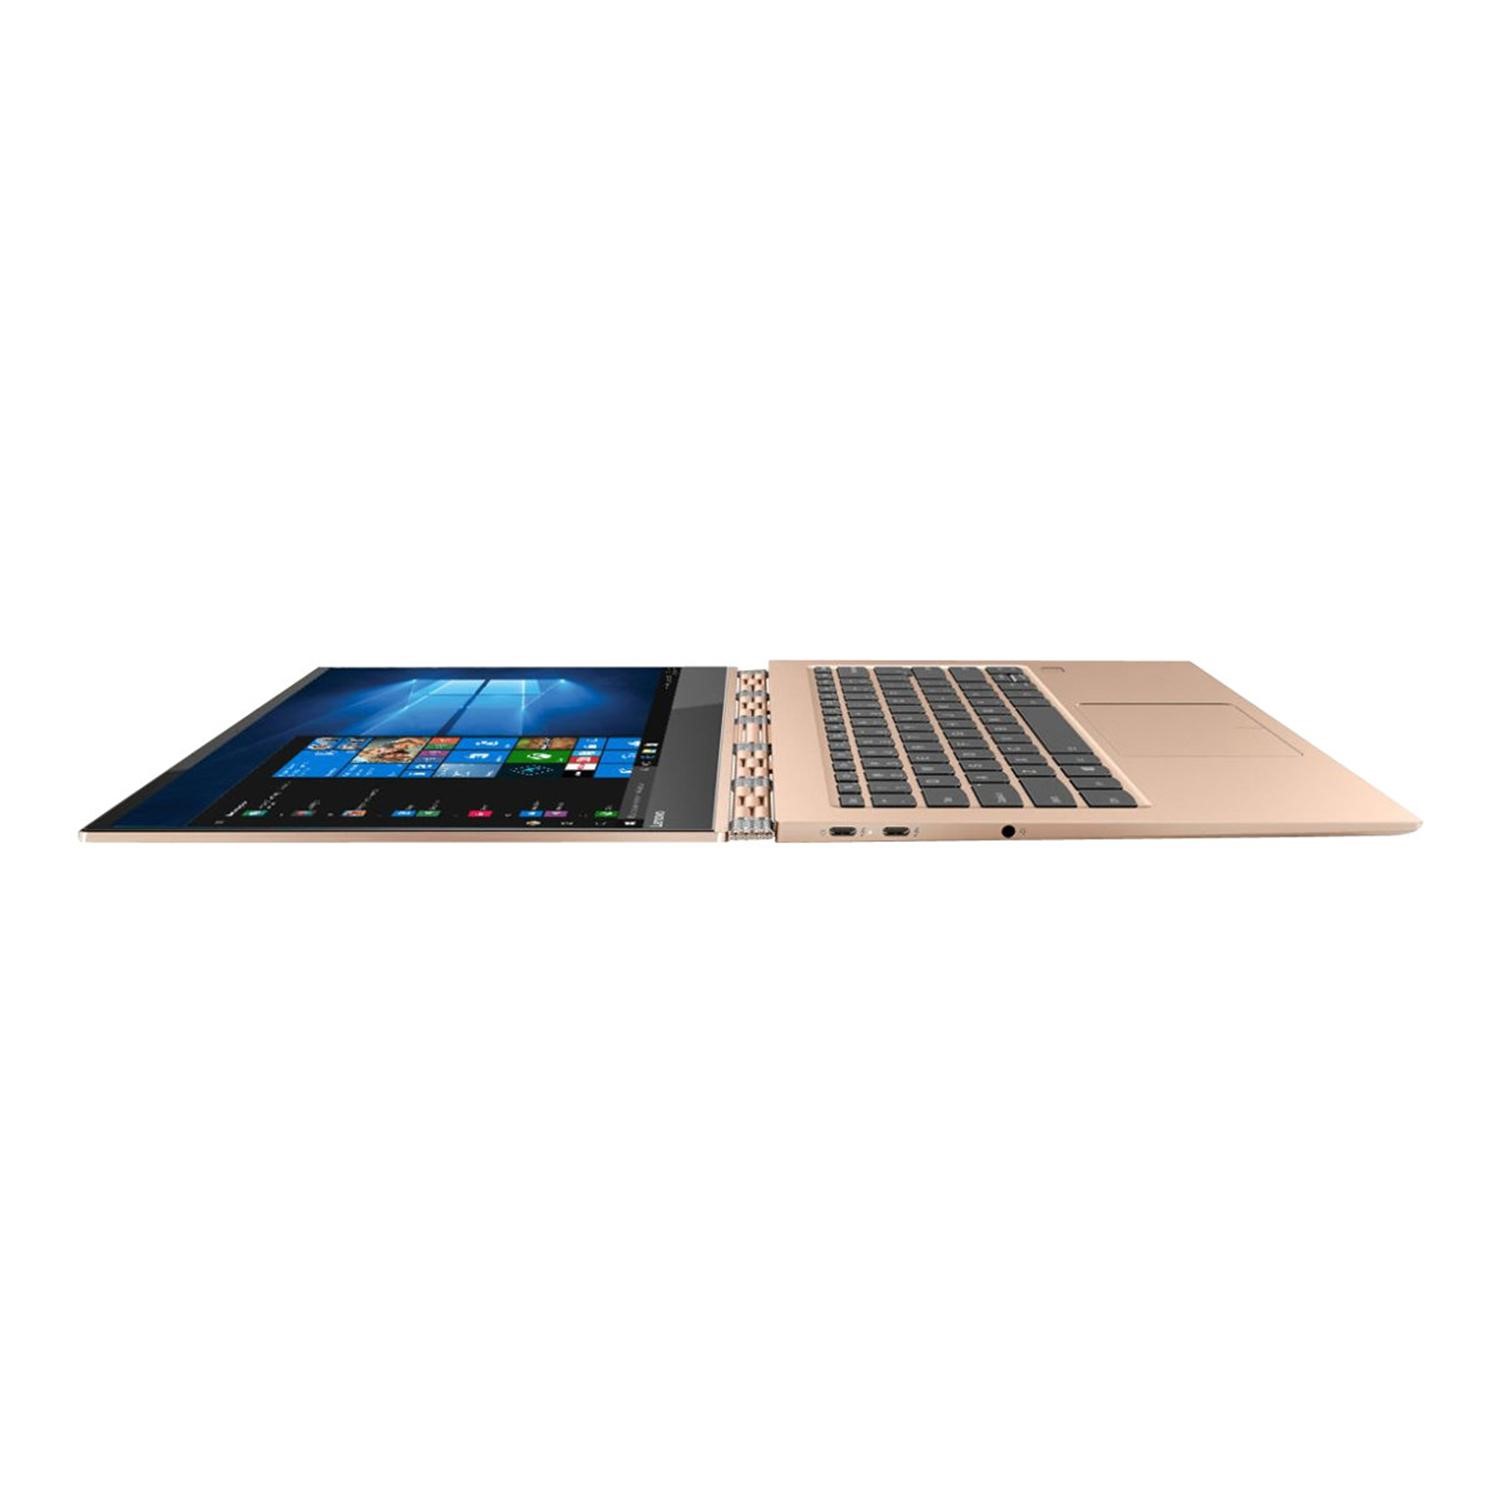 Refurbished Lenovo Yoga 920-13IKB Core i5-8250U 8GB 256GB  Inch  Touchscreen 2 in 1 Windows 10 Laptop in Copper - Laptops Direct